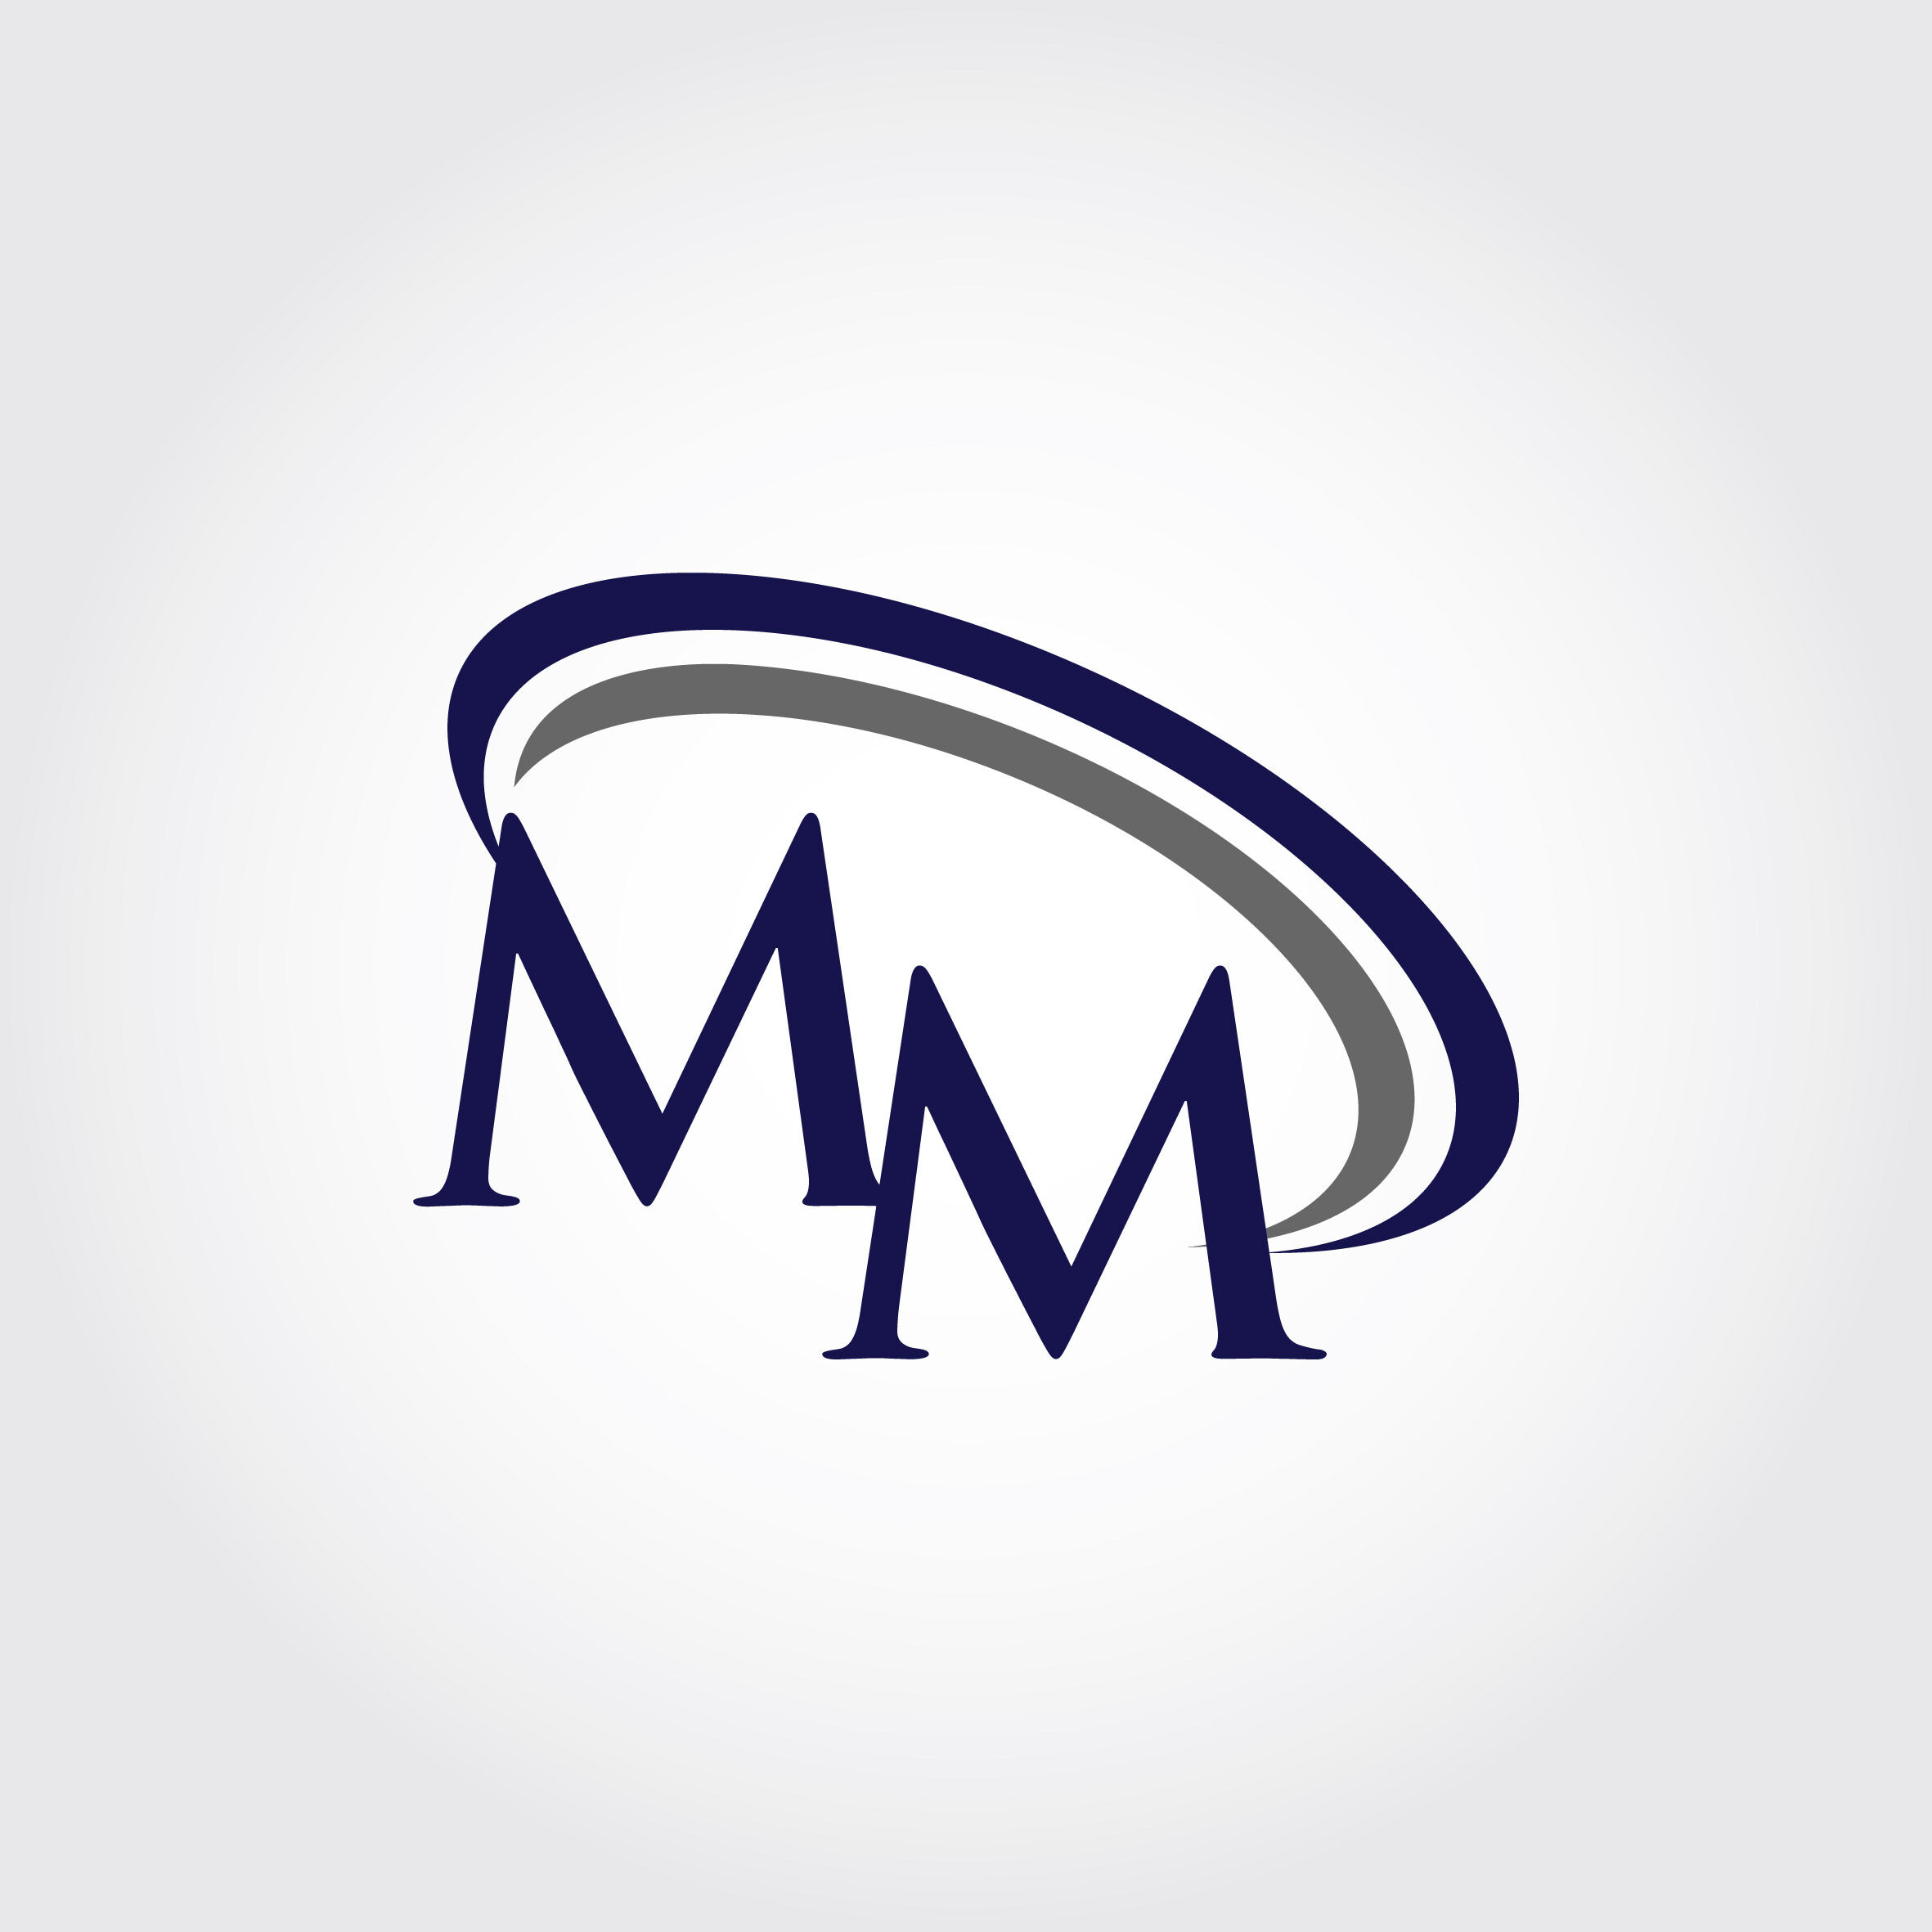 Mm monogram Vectors & Illustrations for Free Download